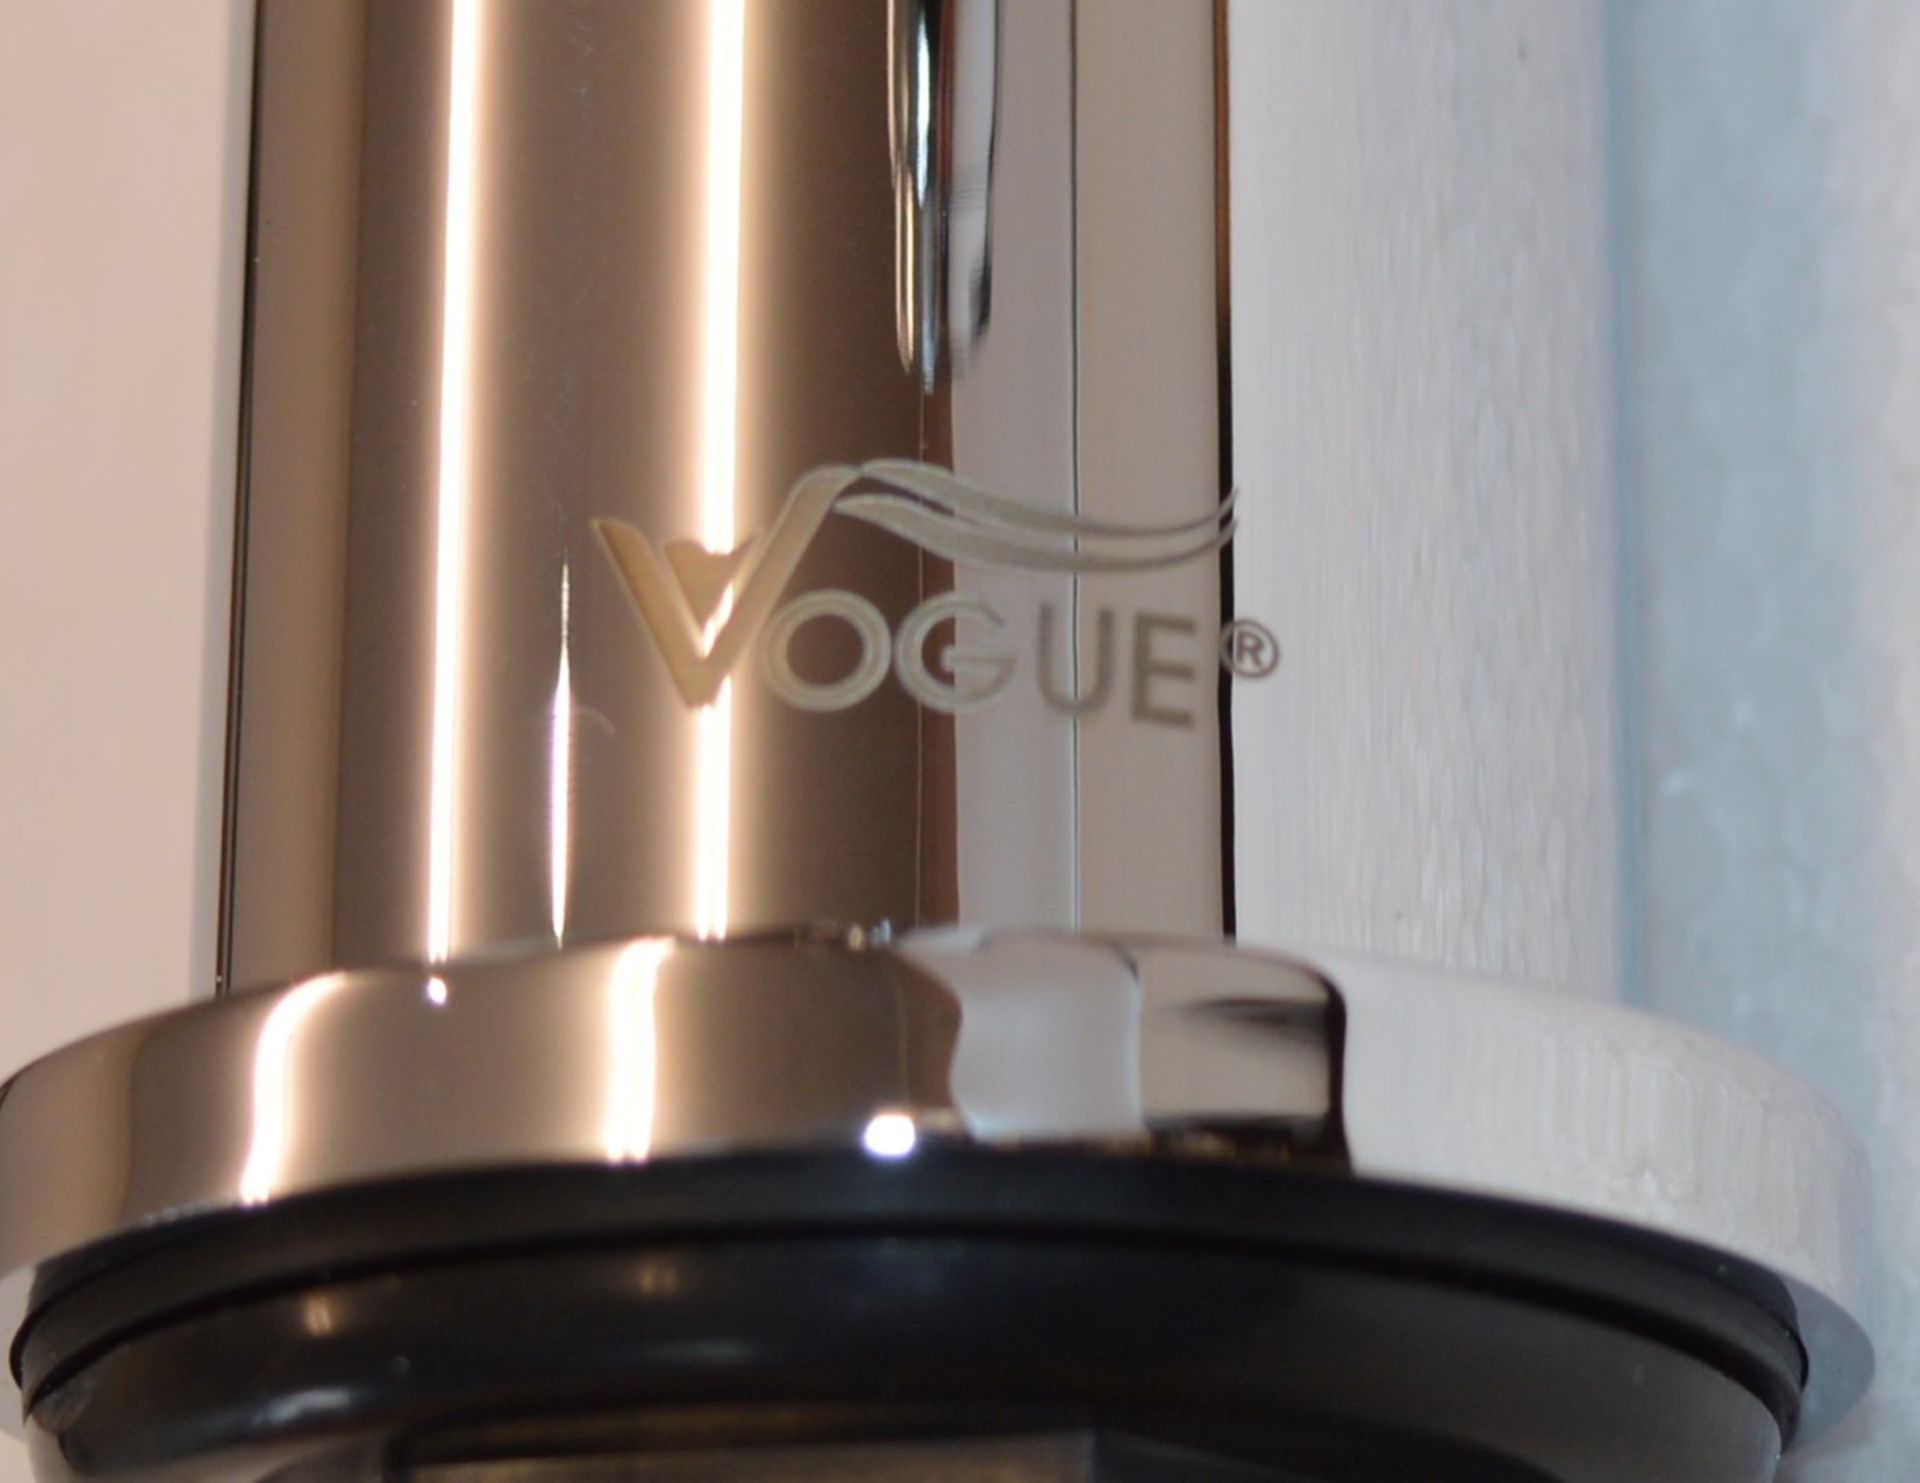 1 x Series 5 BATH TAPS - Vogue Bathrooms Platinum Brassware Collection - Pair of - Contemporary - Image 7 of 9